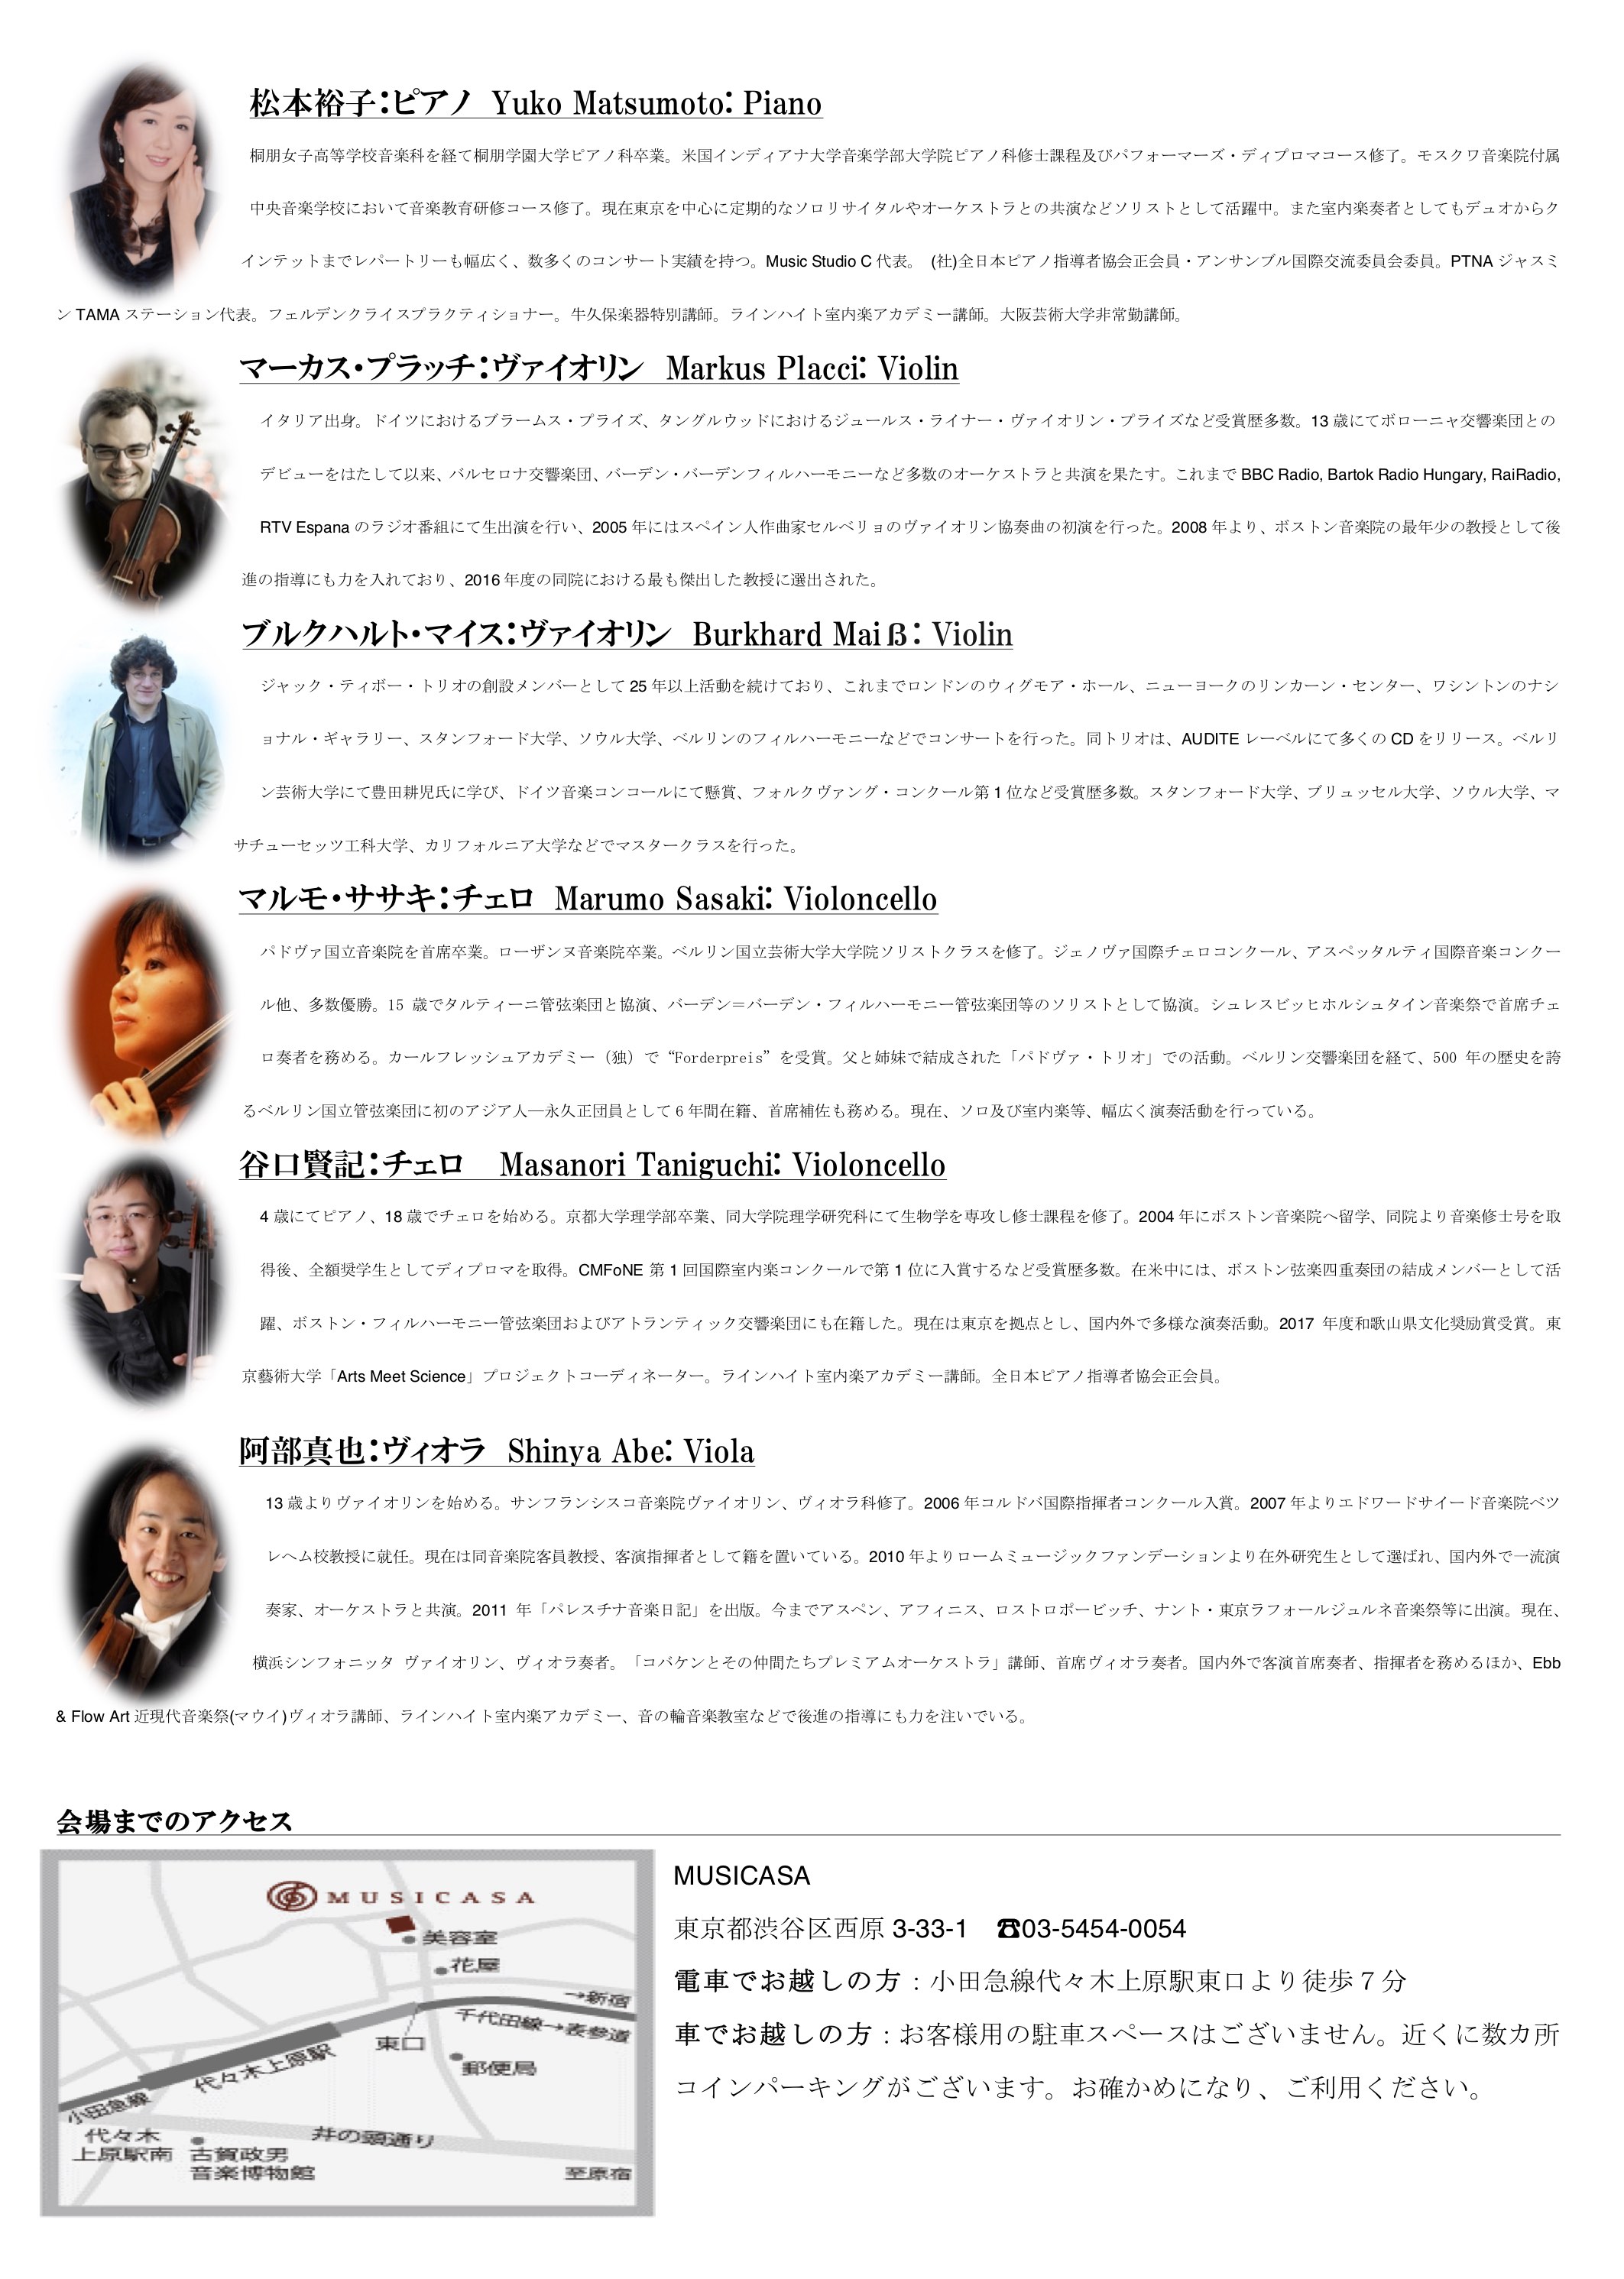 Masanori Taniguchi Official Website